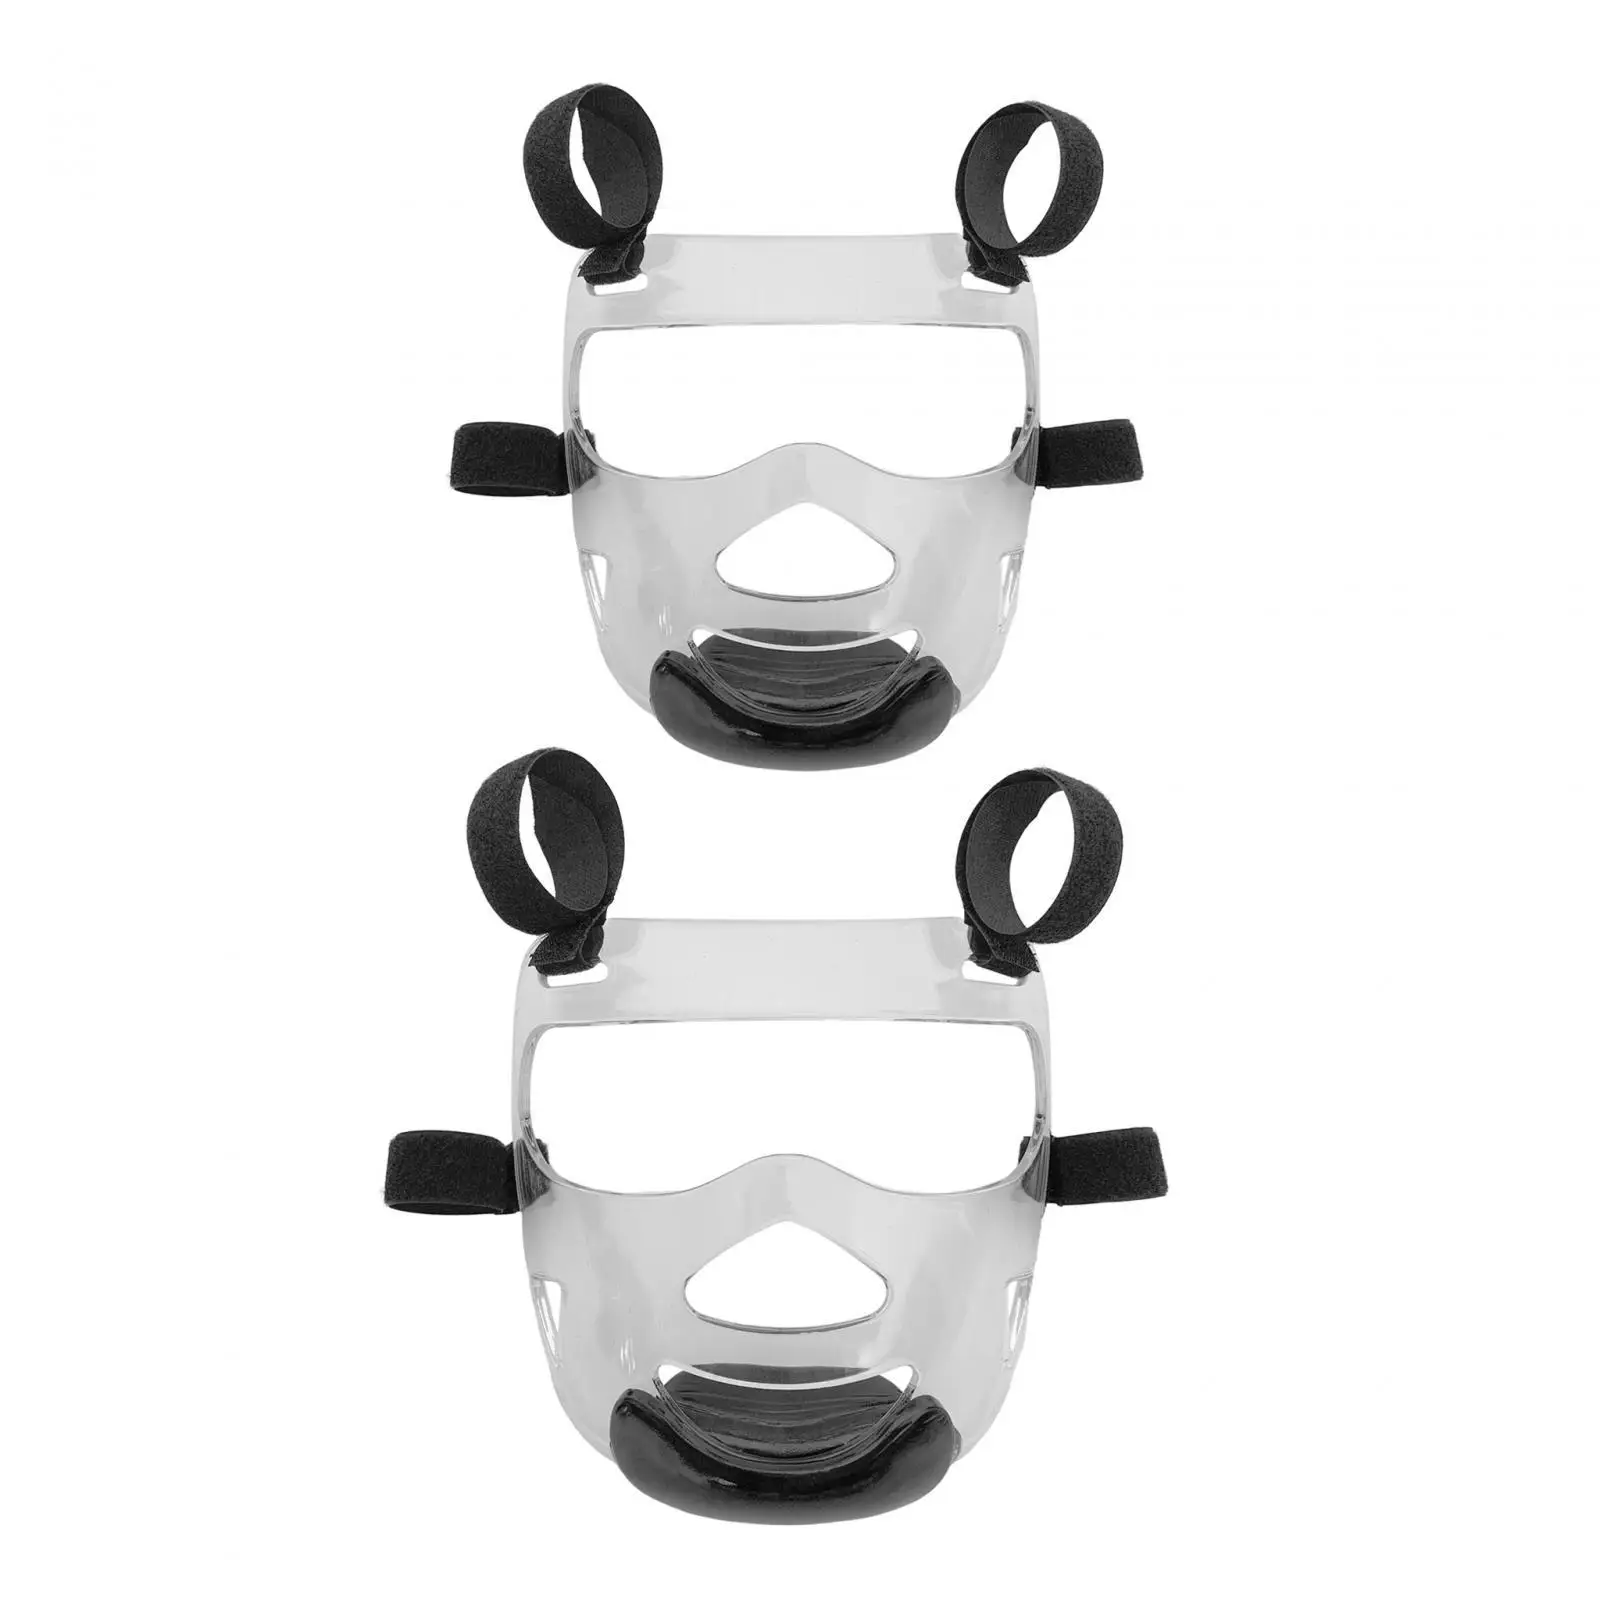 Taekwondo Face Mask Taekwondo Face Shield Protector Thickening Head Cover Transparent Face Guard Sparring Mask for Martial Arts